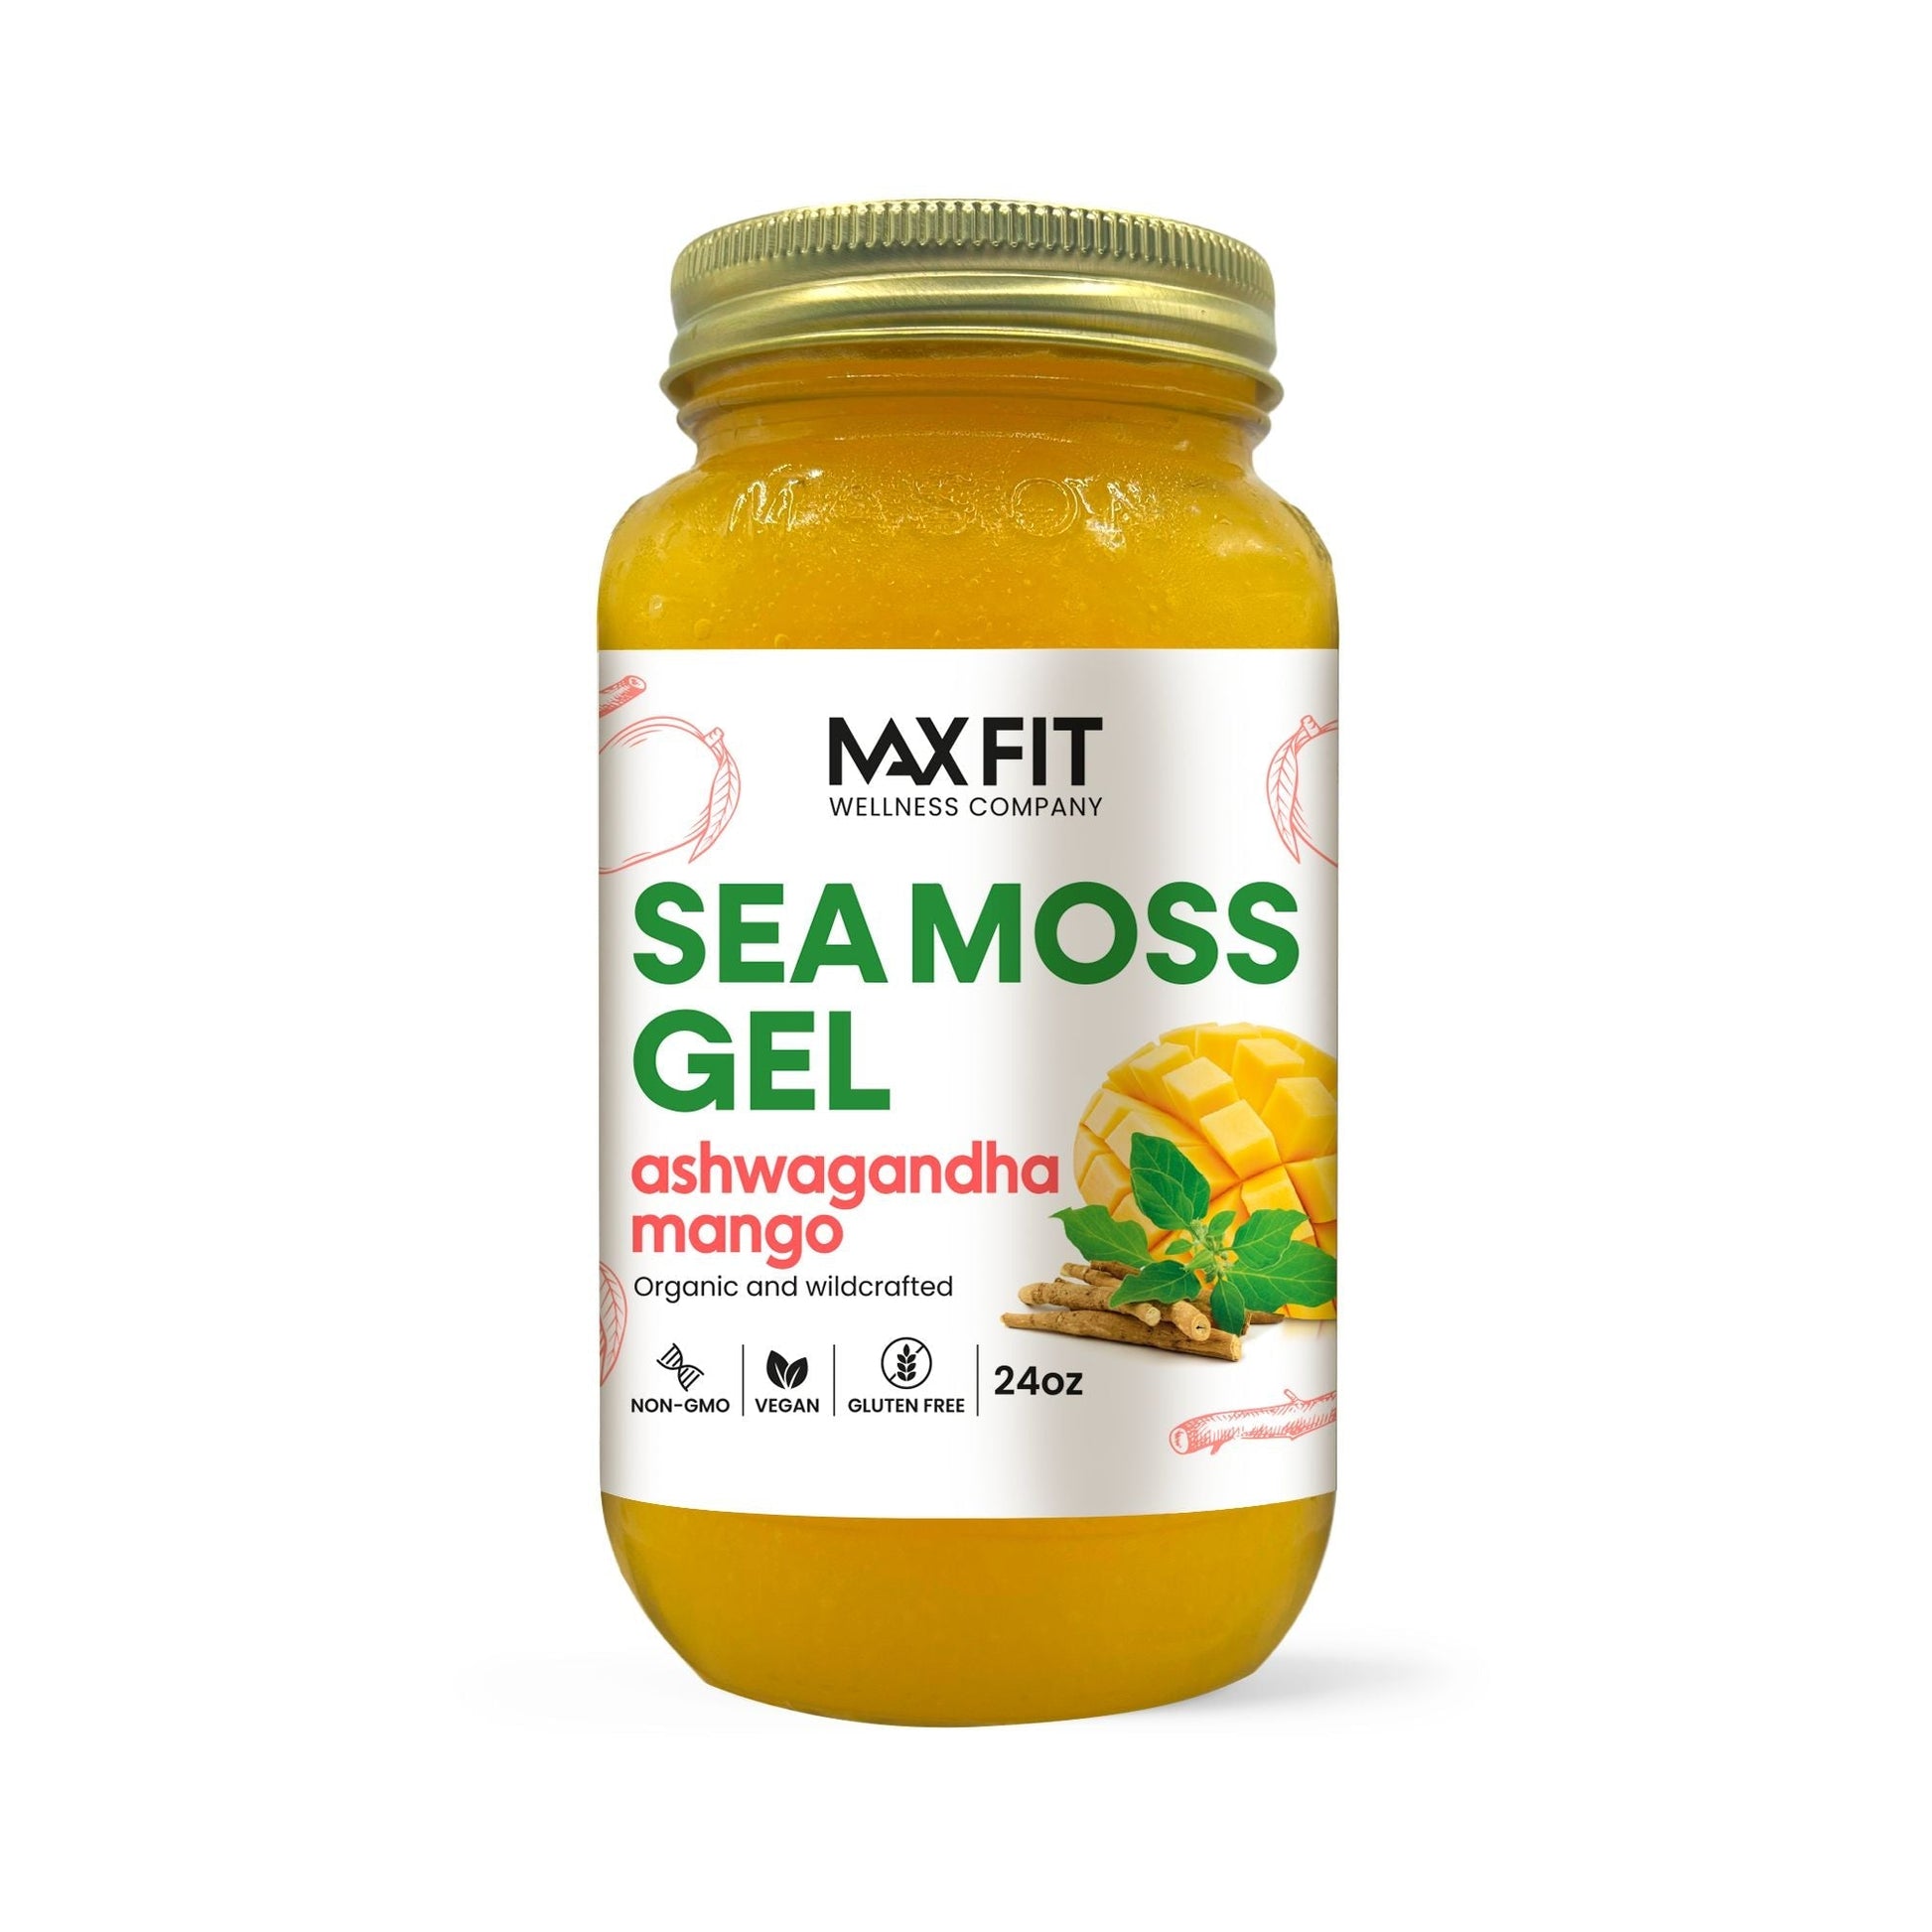 Ashwagandha Mango Sea Moss Gel 24oz - 1800SEAMOSS.com